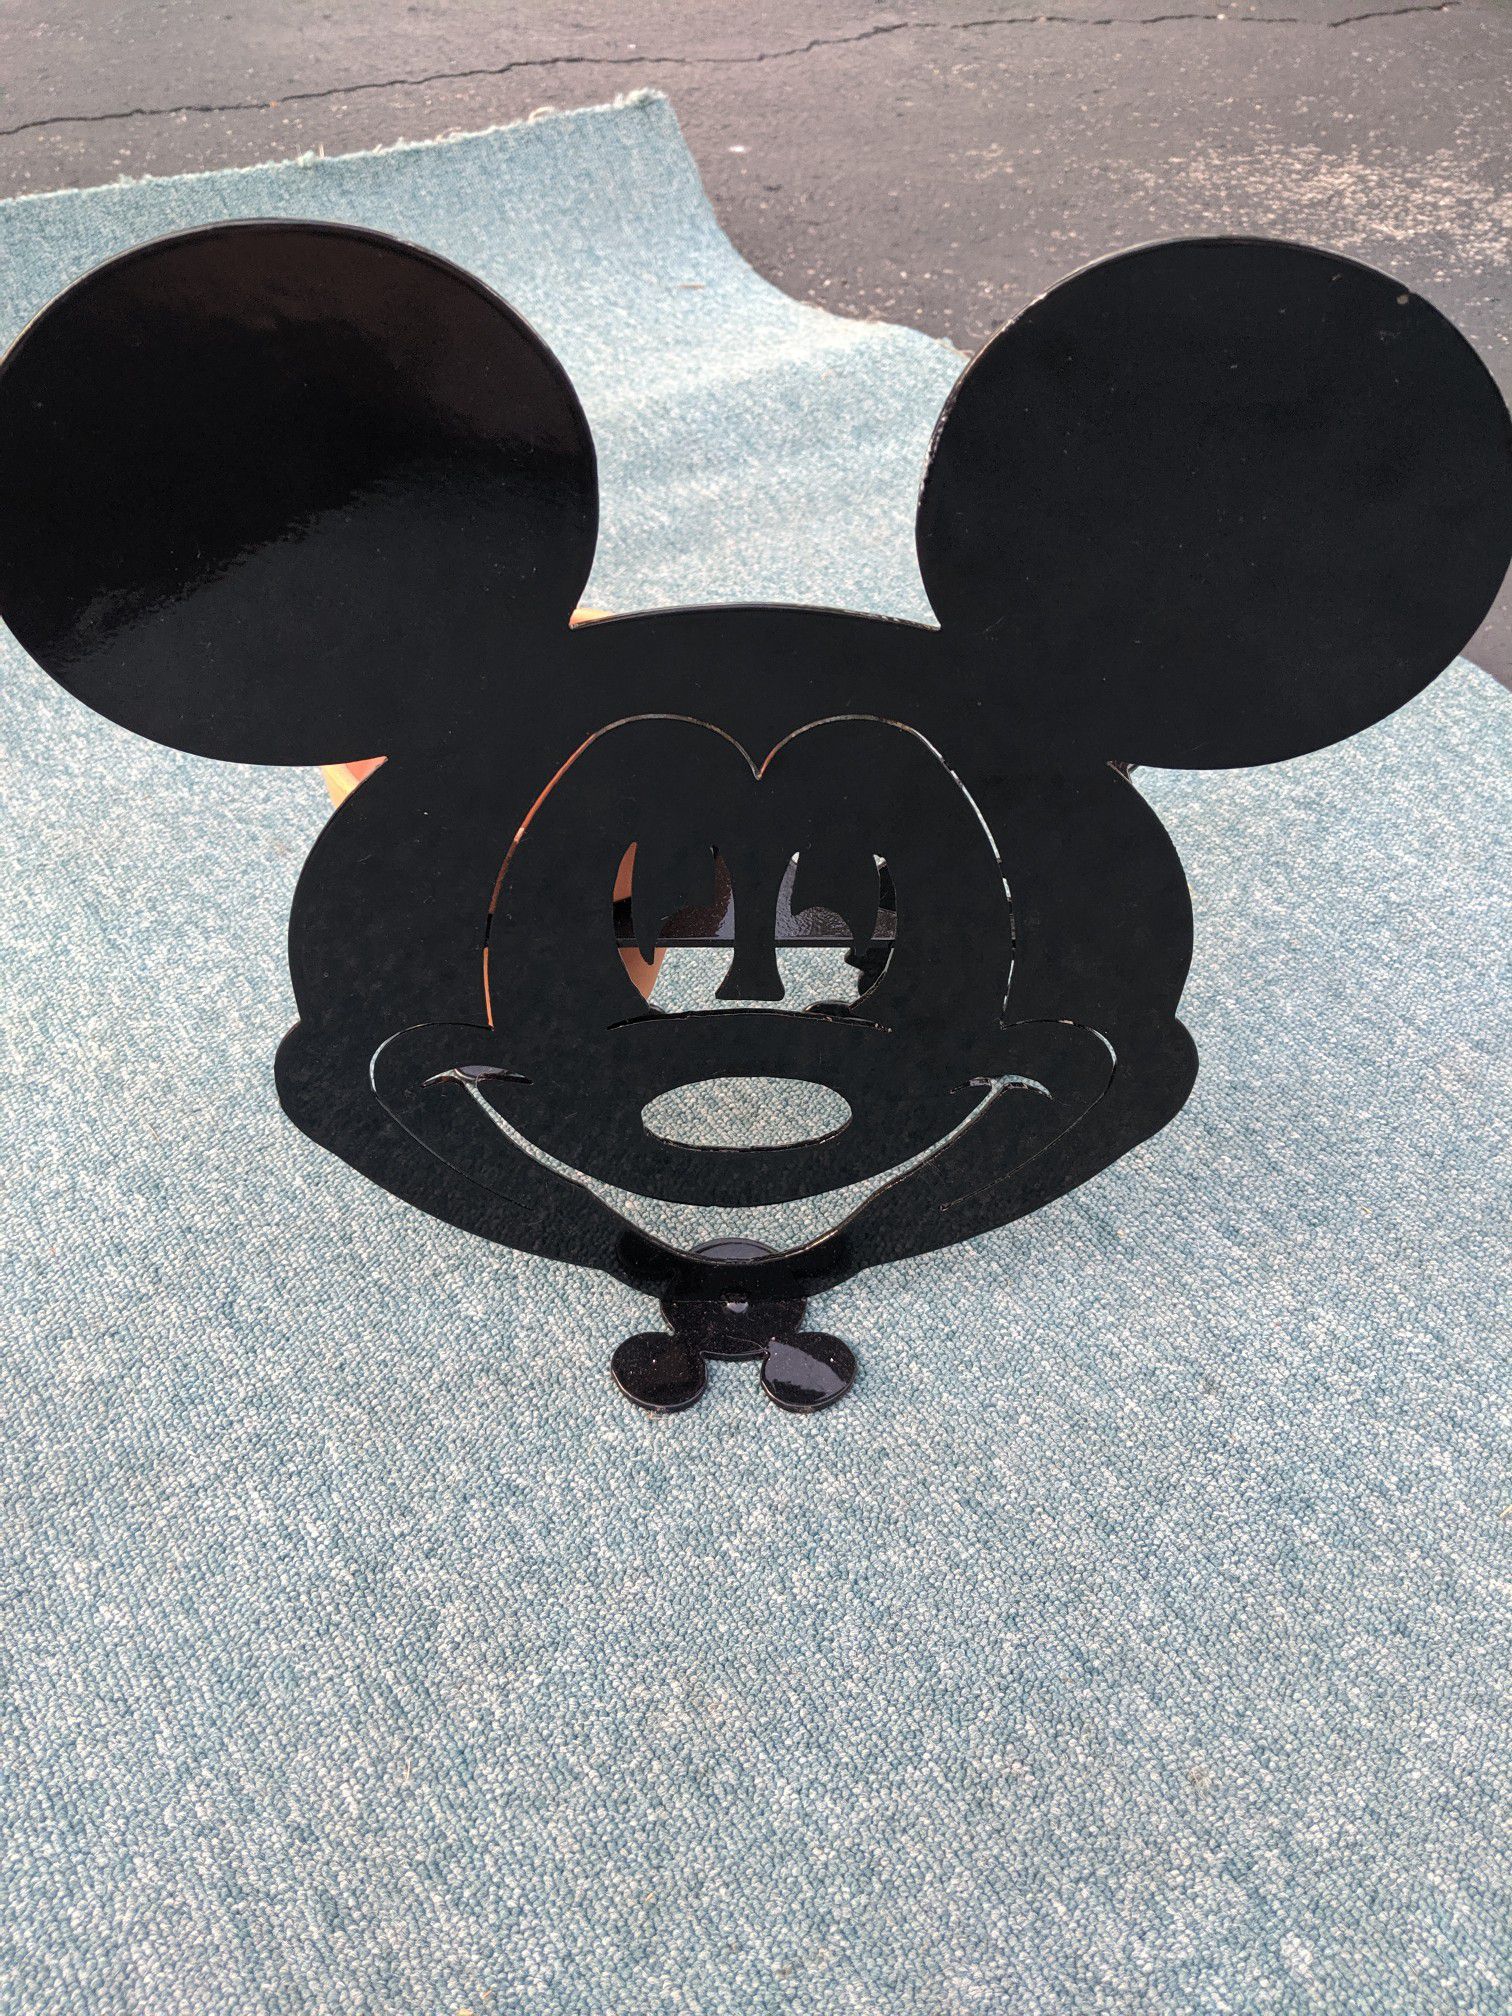 Mickey Mouse flower pot holder